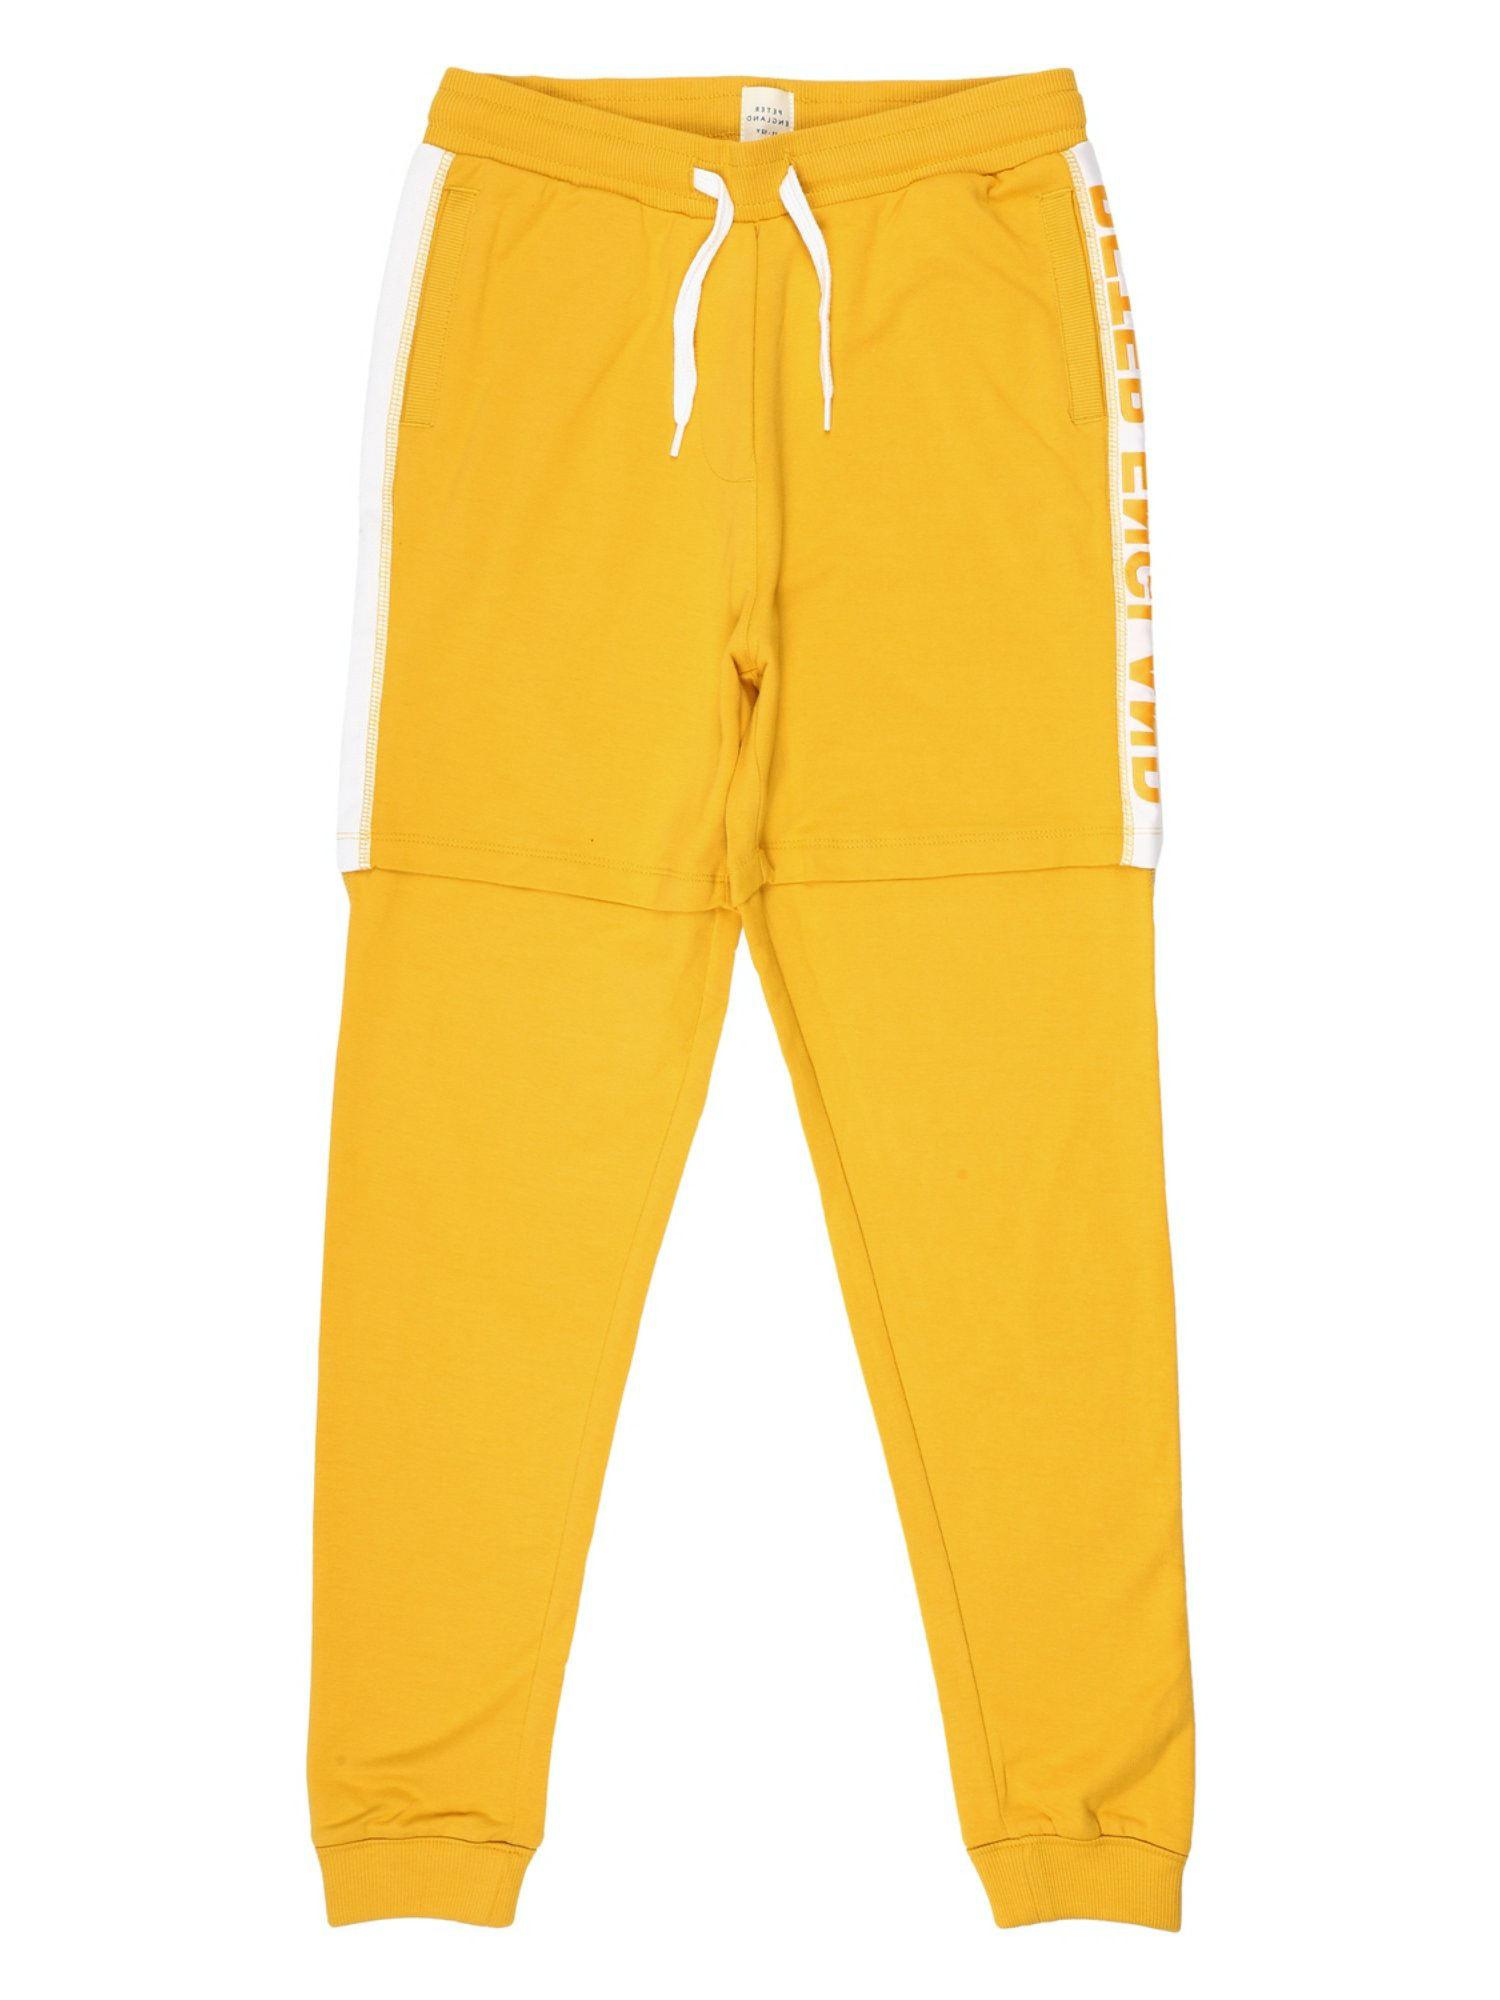 boys yellow jogger pants